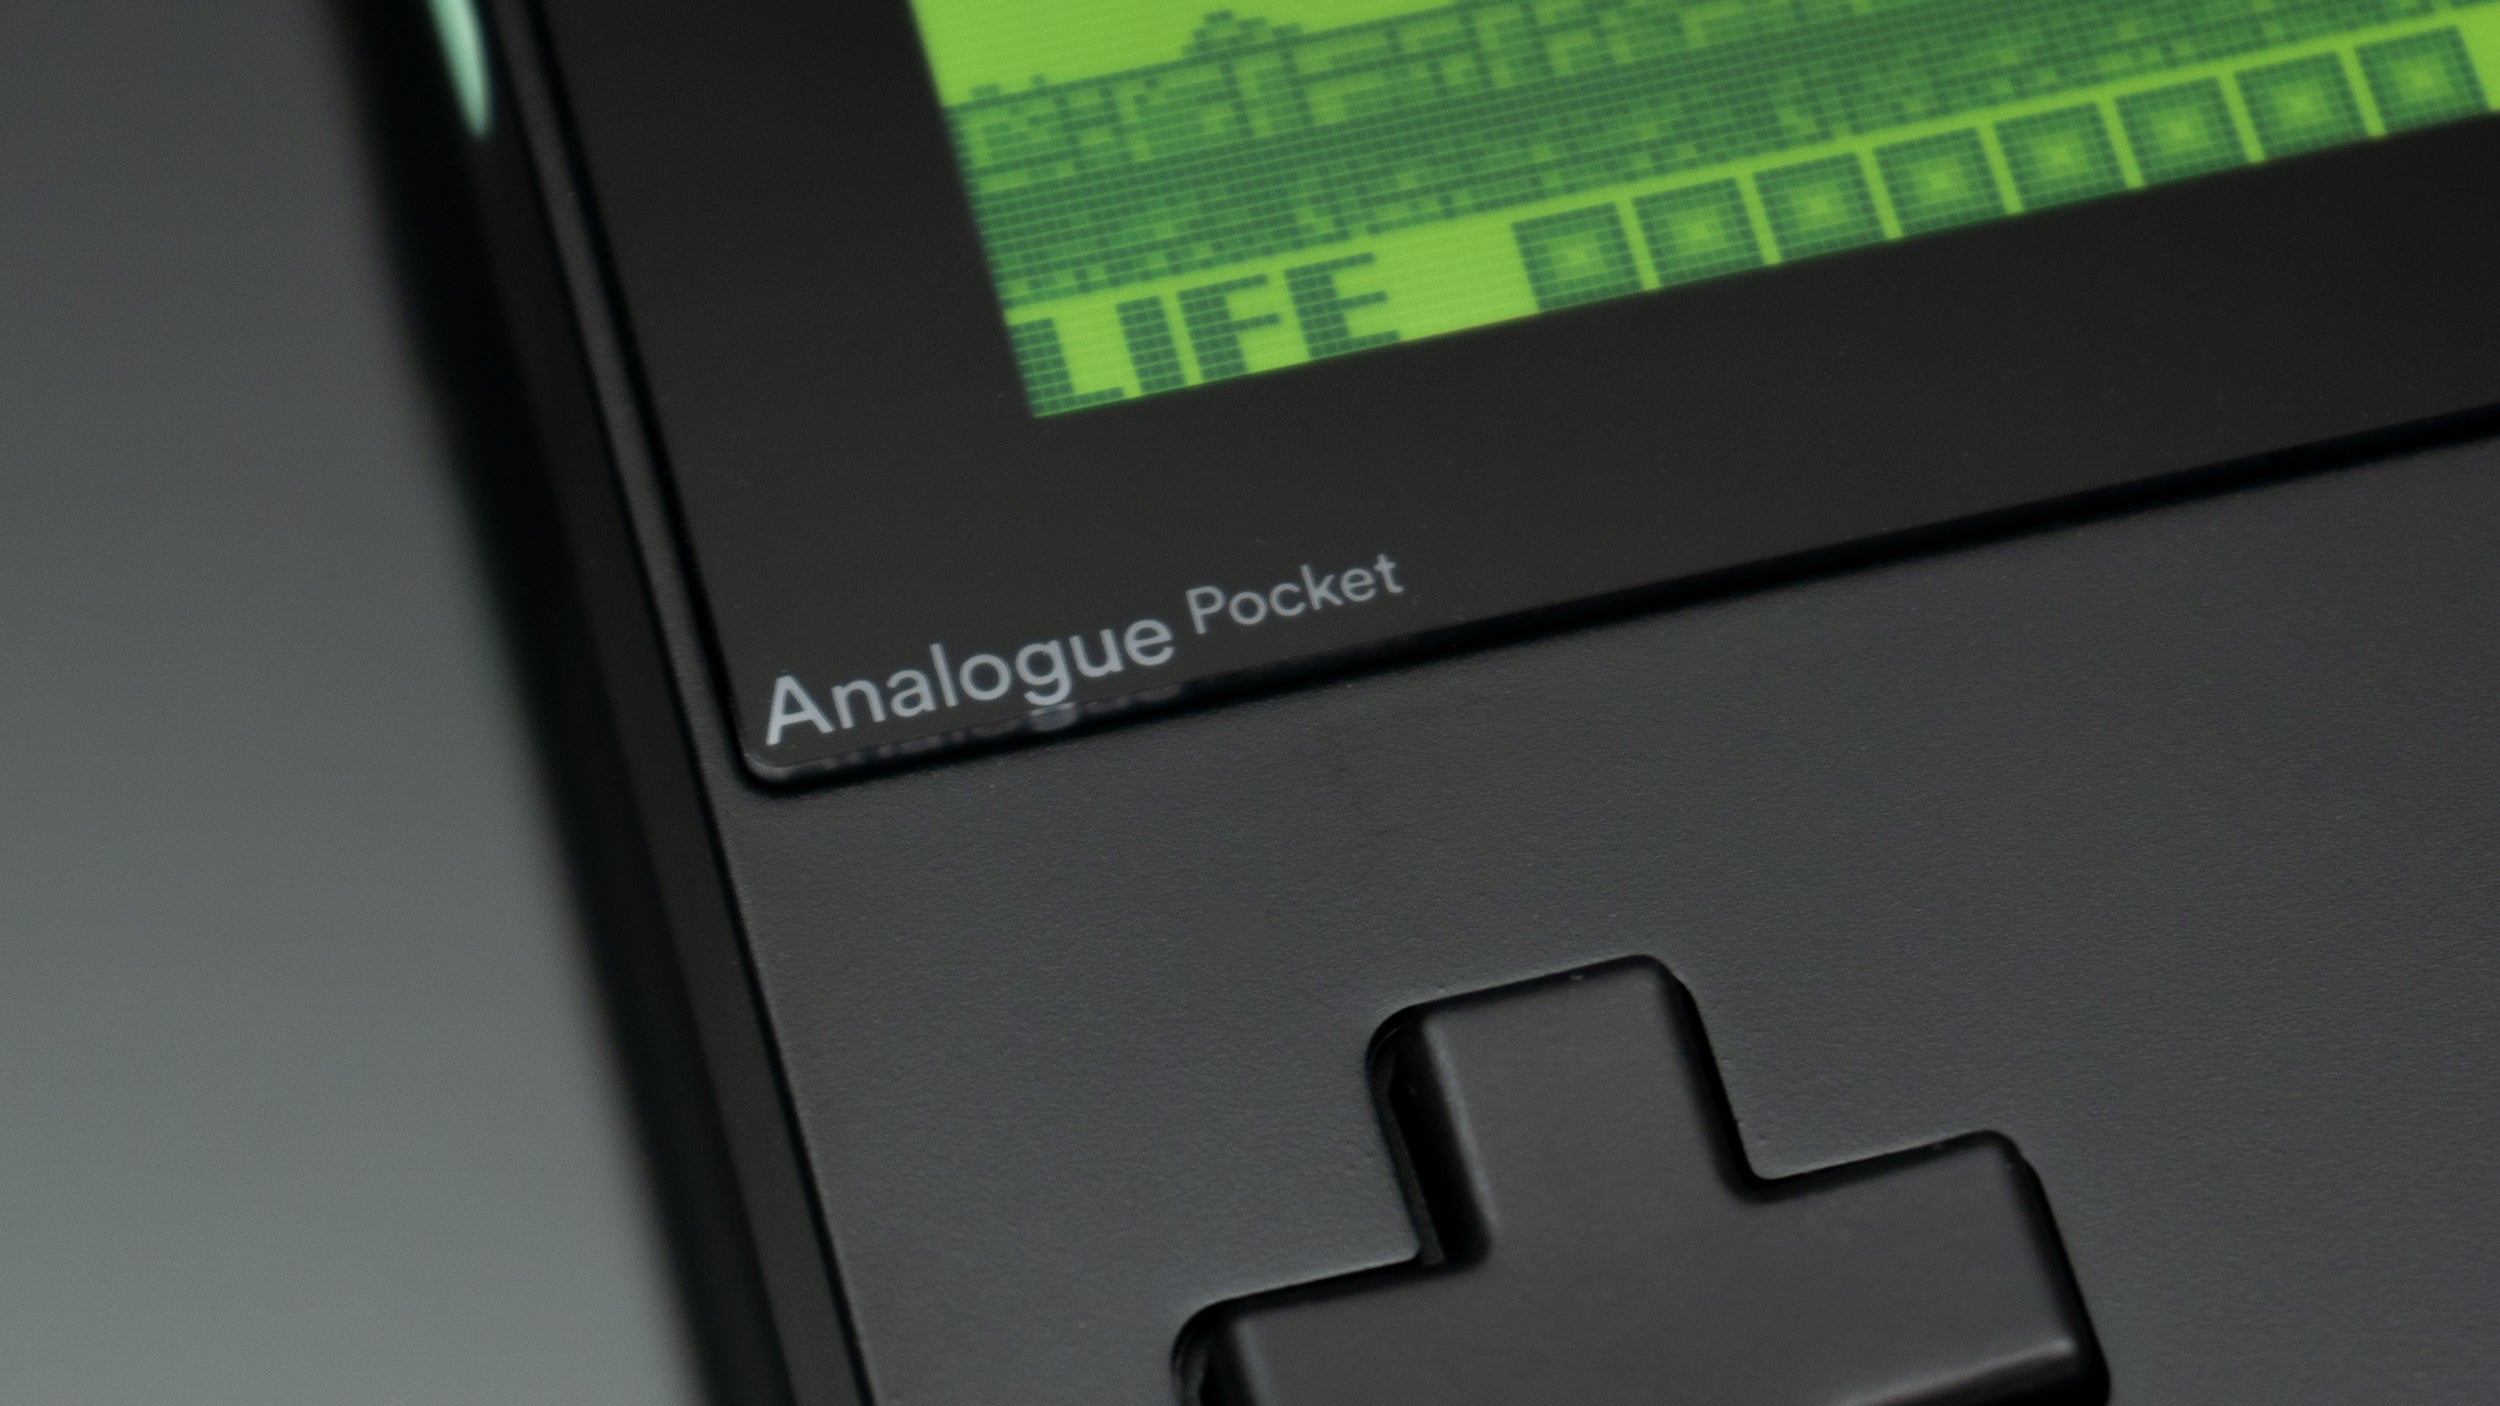 Analogue Pocket